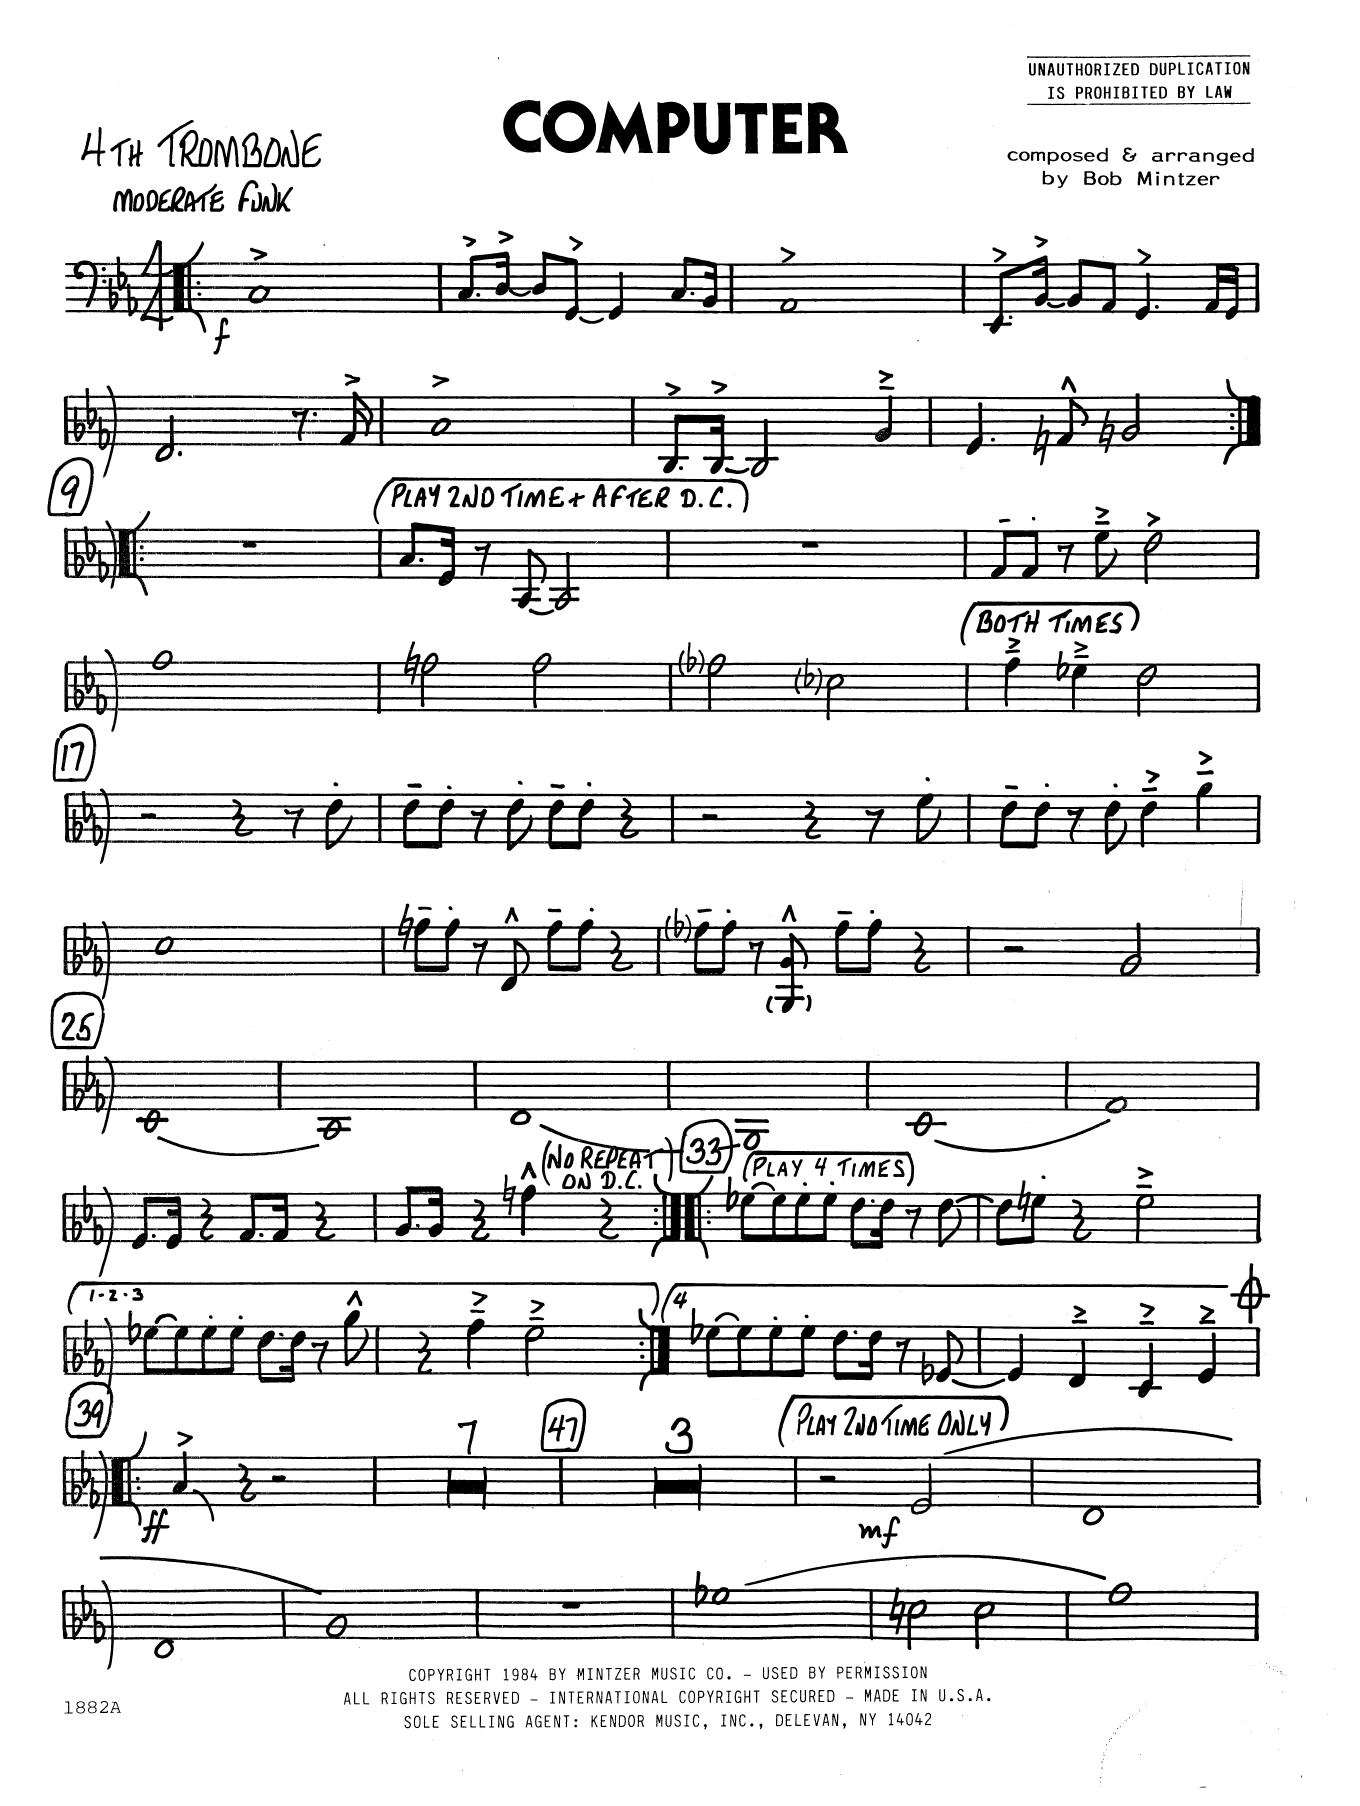 Download Bob Mintzer Computer - 4th Trombone Sheet Music